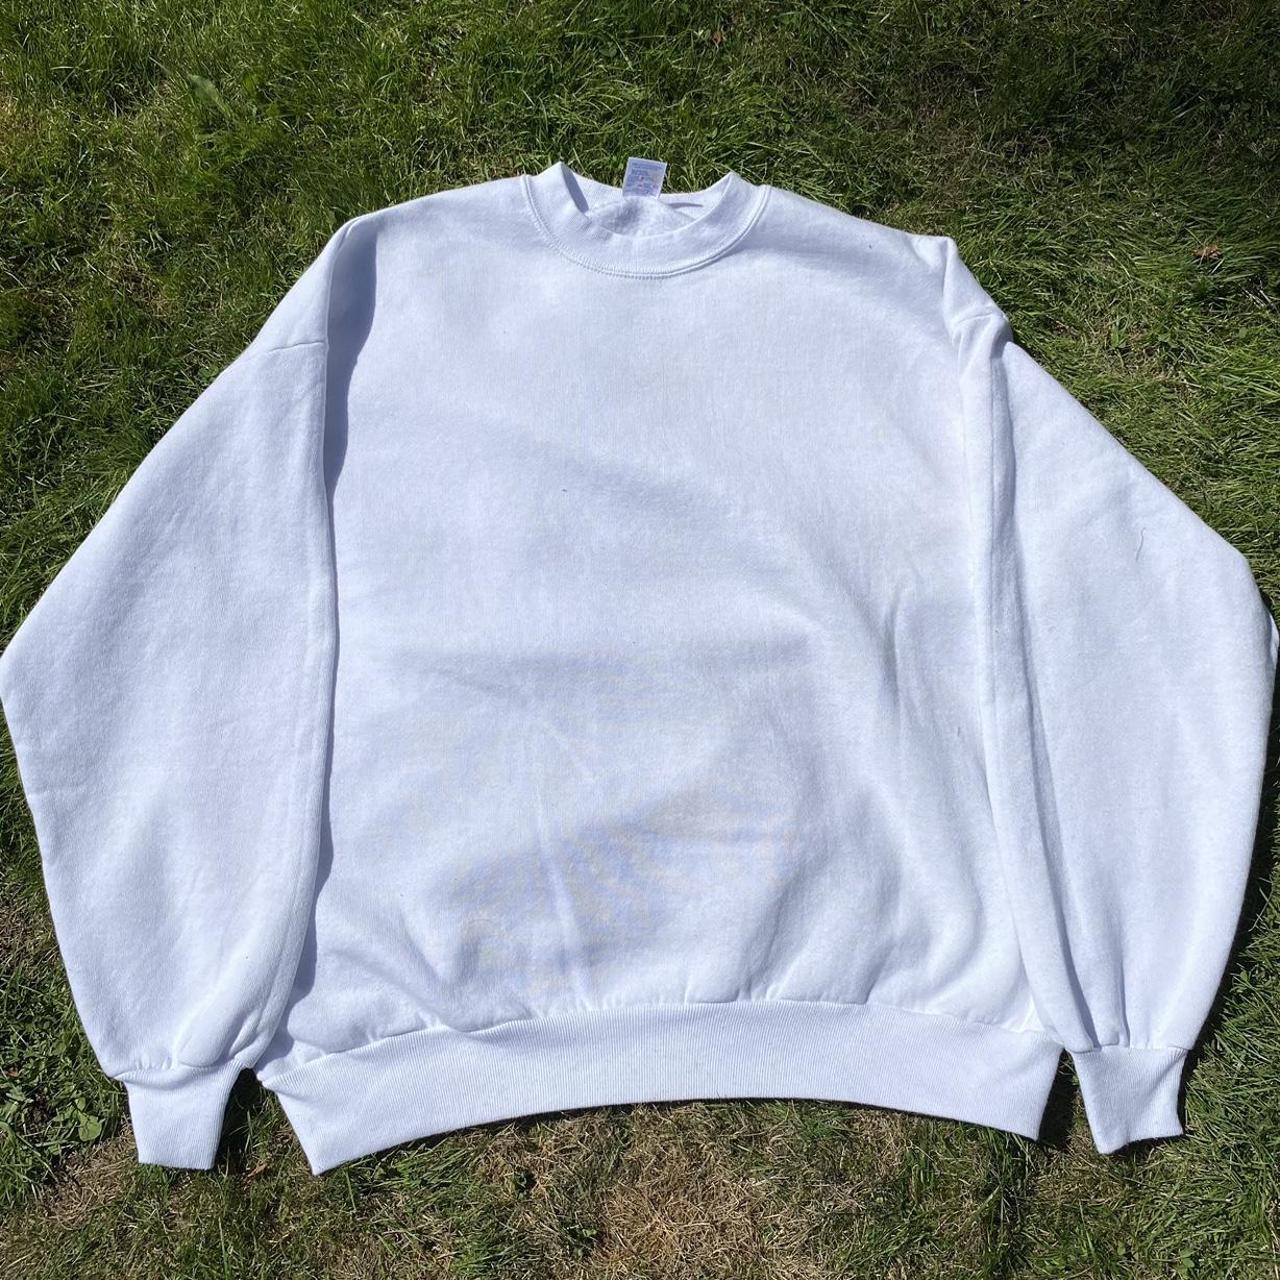 Product Image 1 - 90’s Vintage White Fleece Sweater